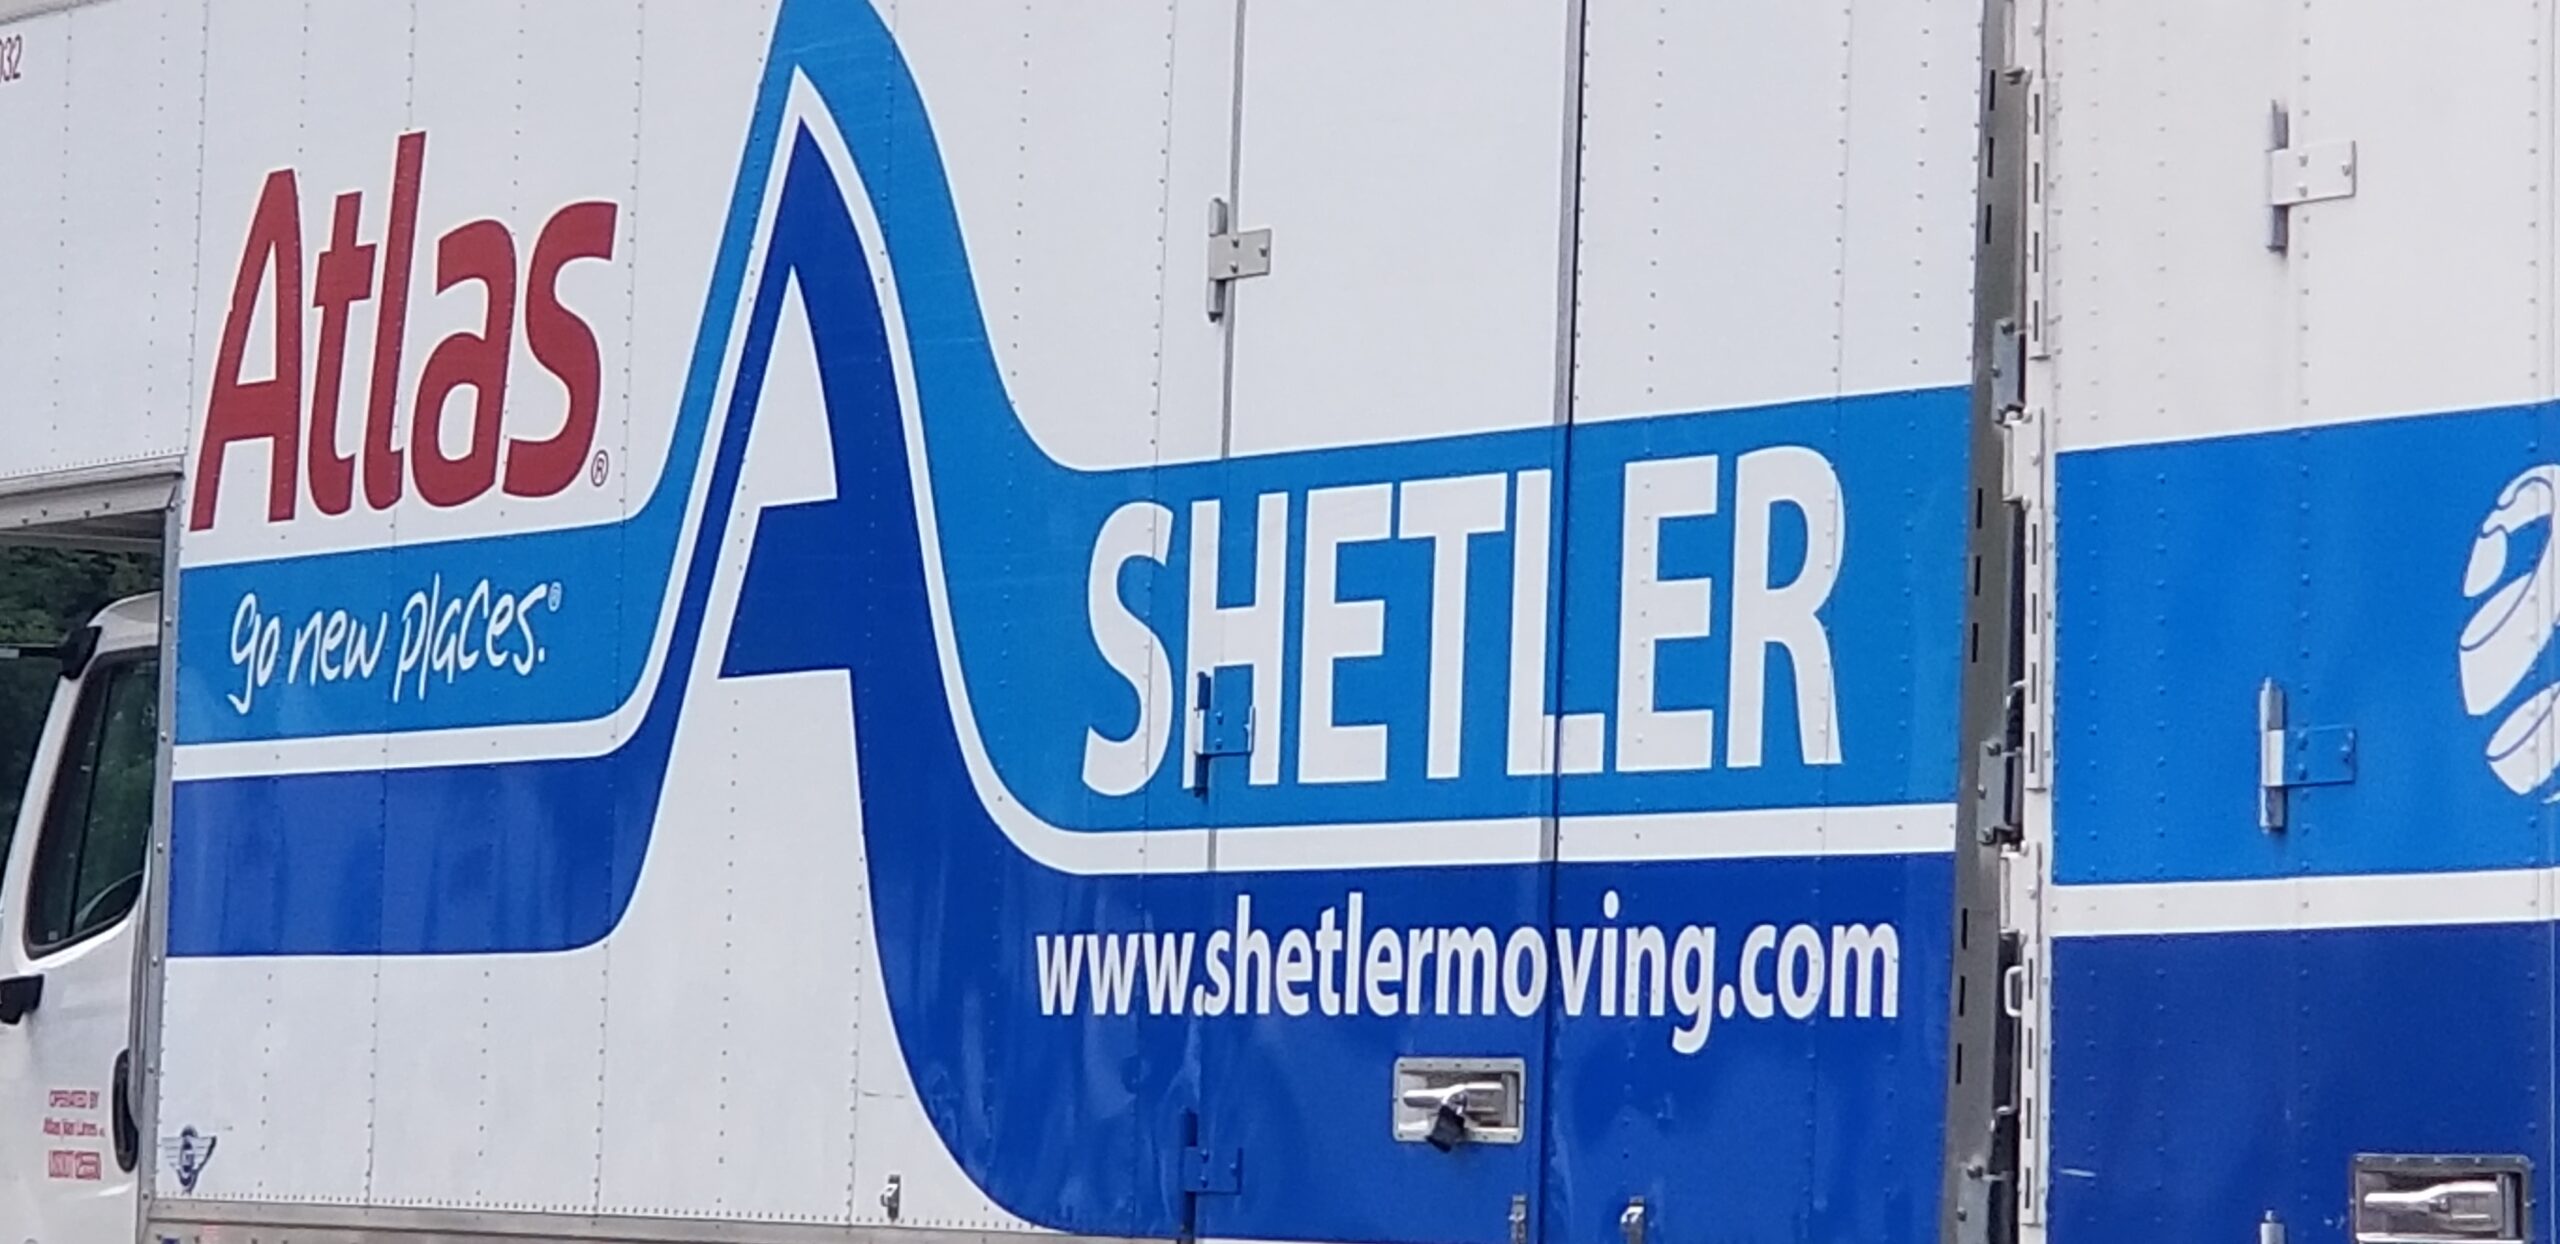 Shetler Moving & Storage